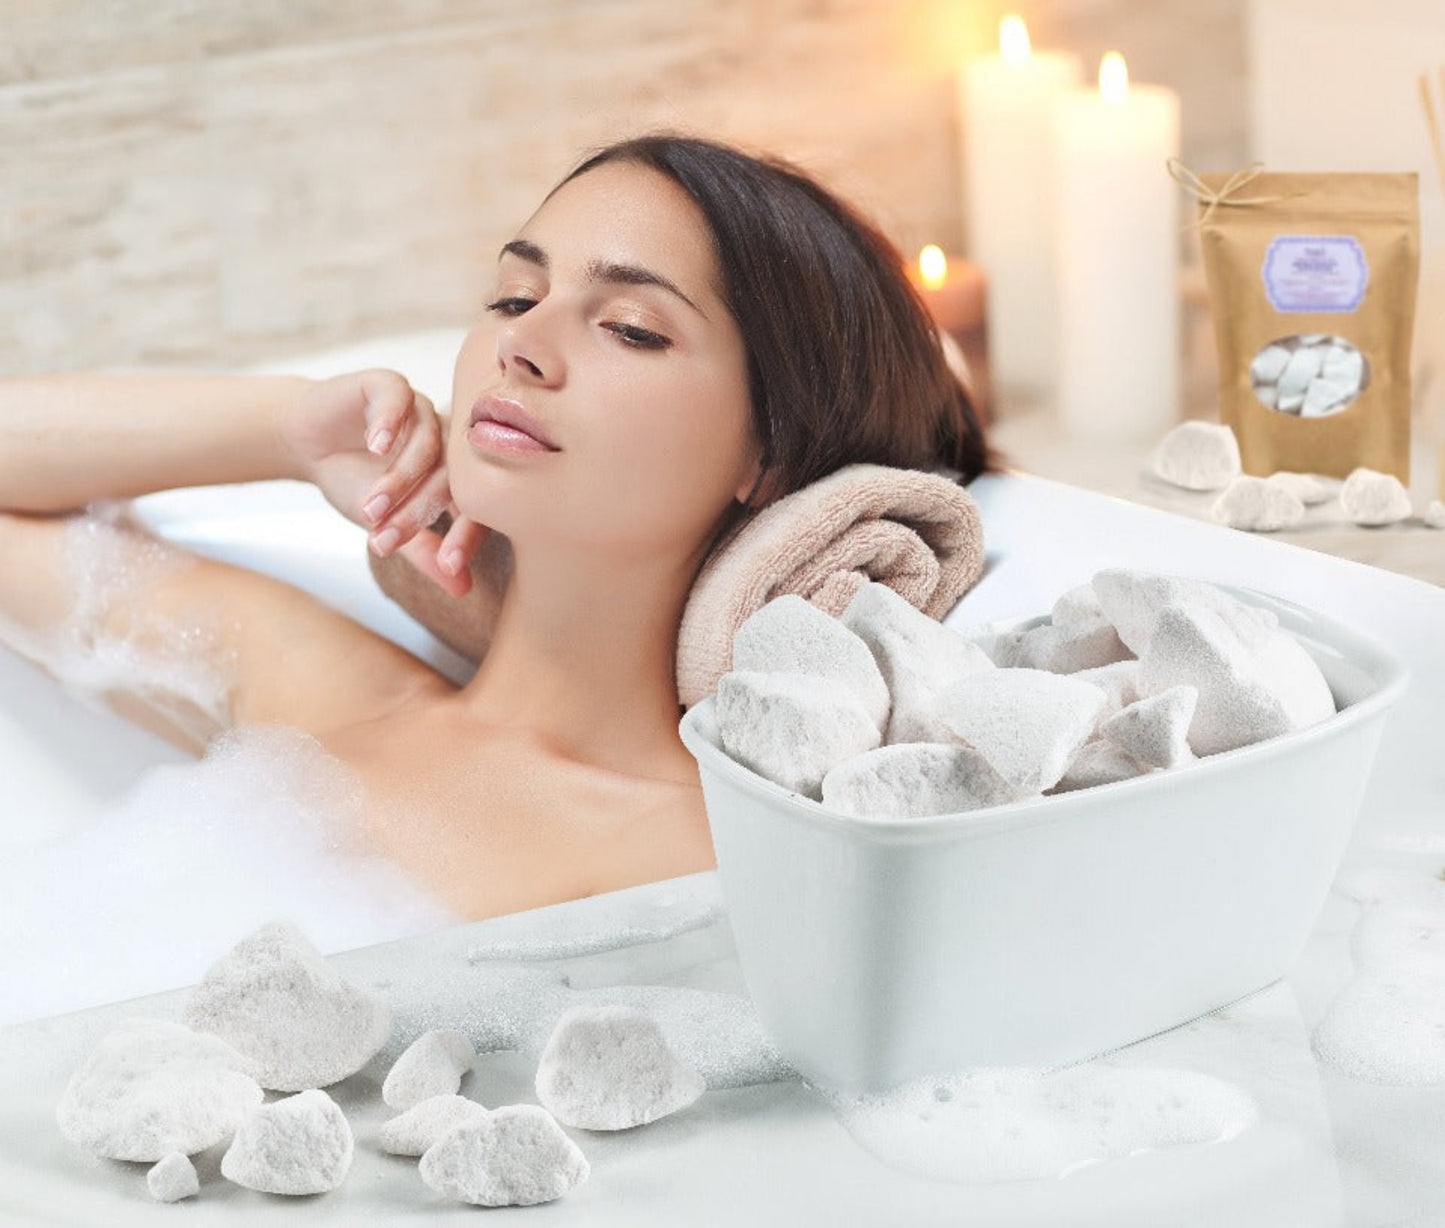 250G Aromatherapy Vanilla Bath Rocks - Enriched with Essential Oils, Shea Butter, & Vitamin E